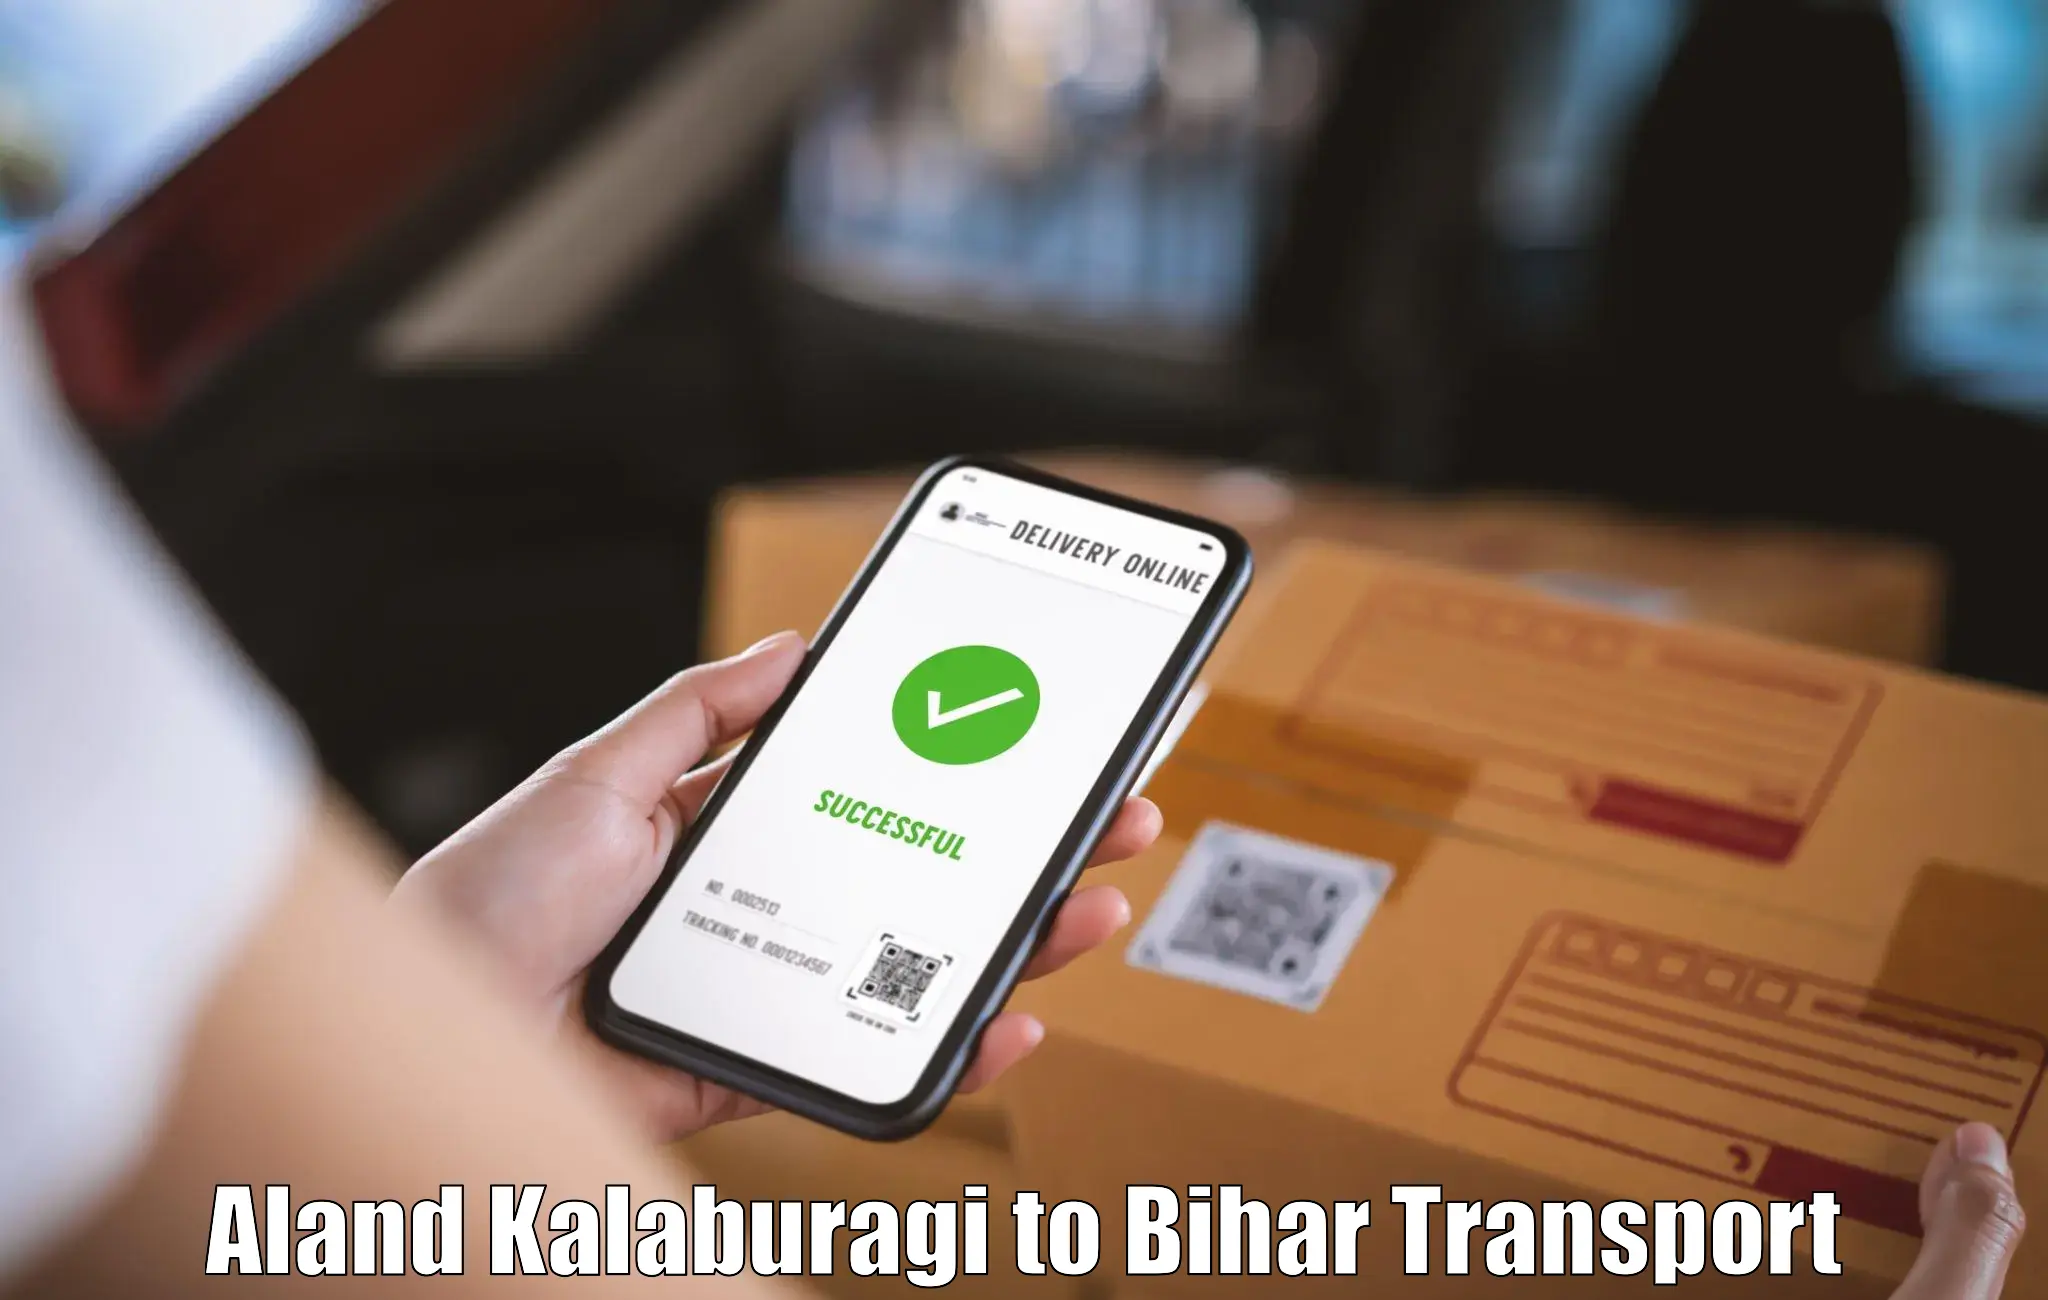 Container transport service Aland Kalaburagi to Bhorey